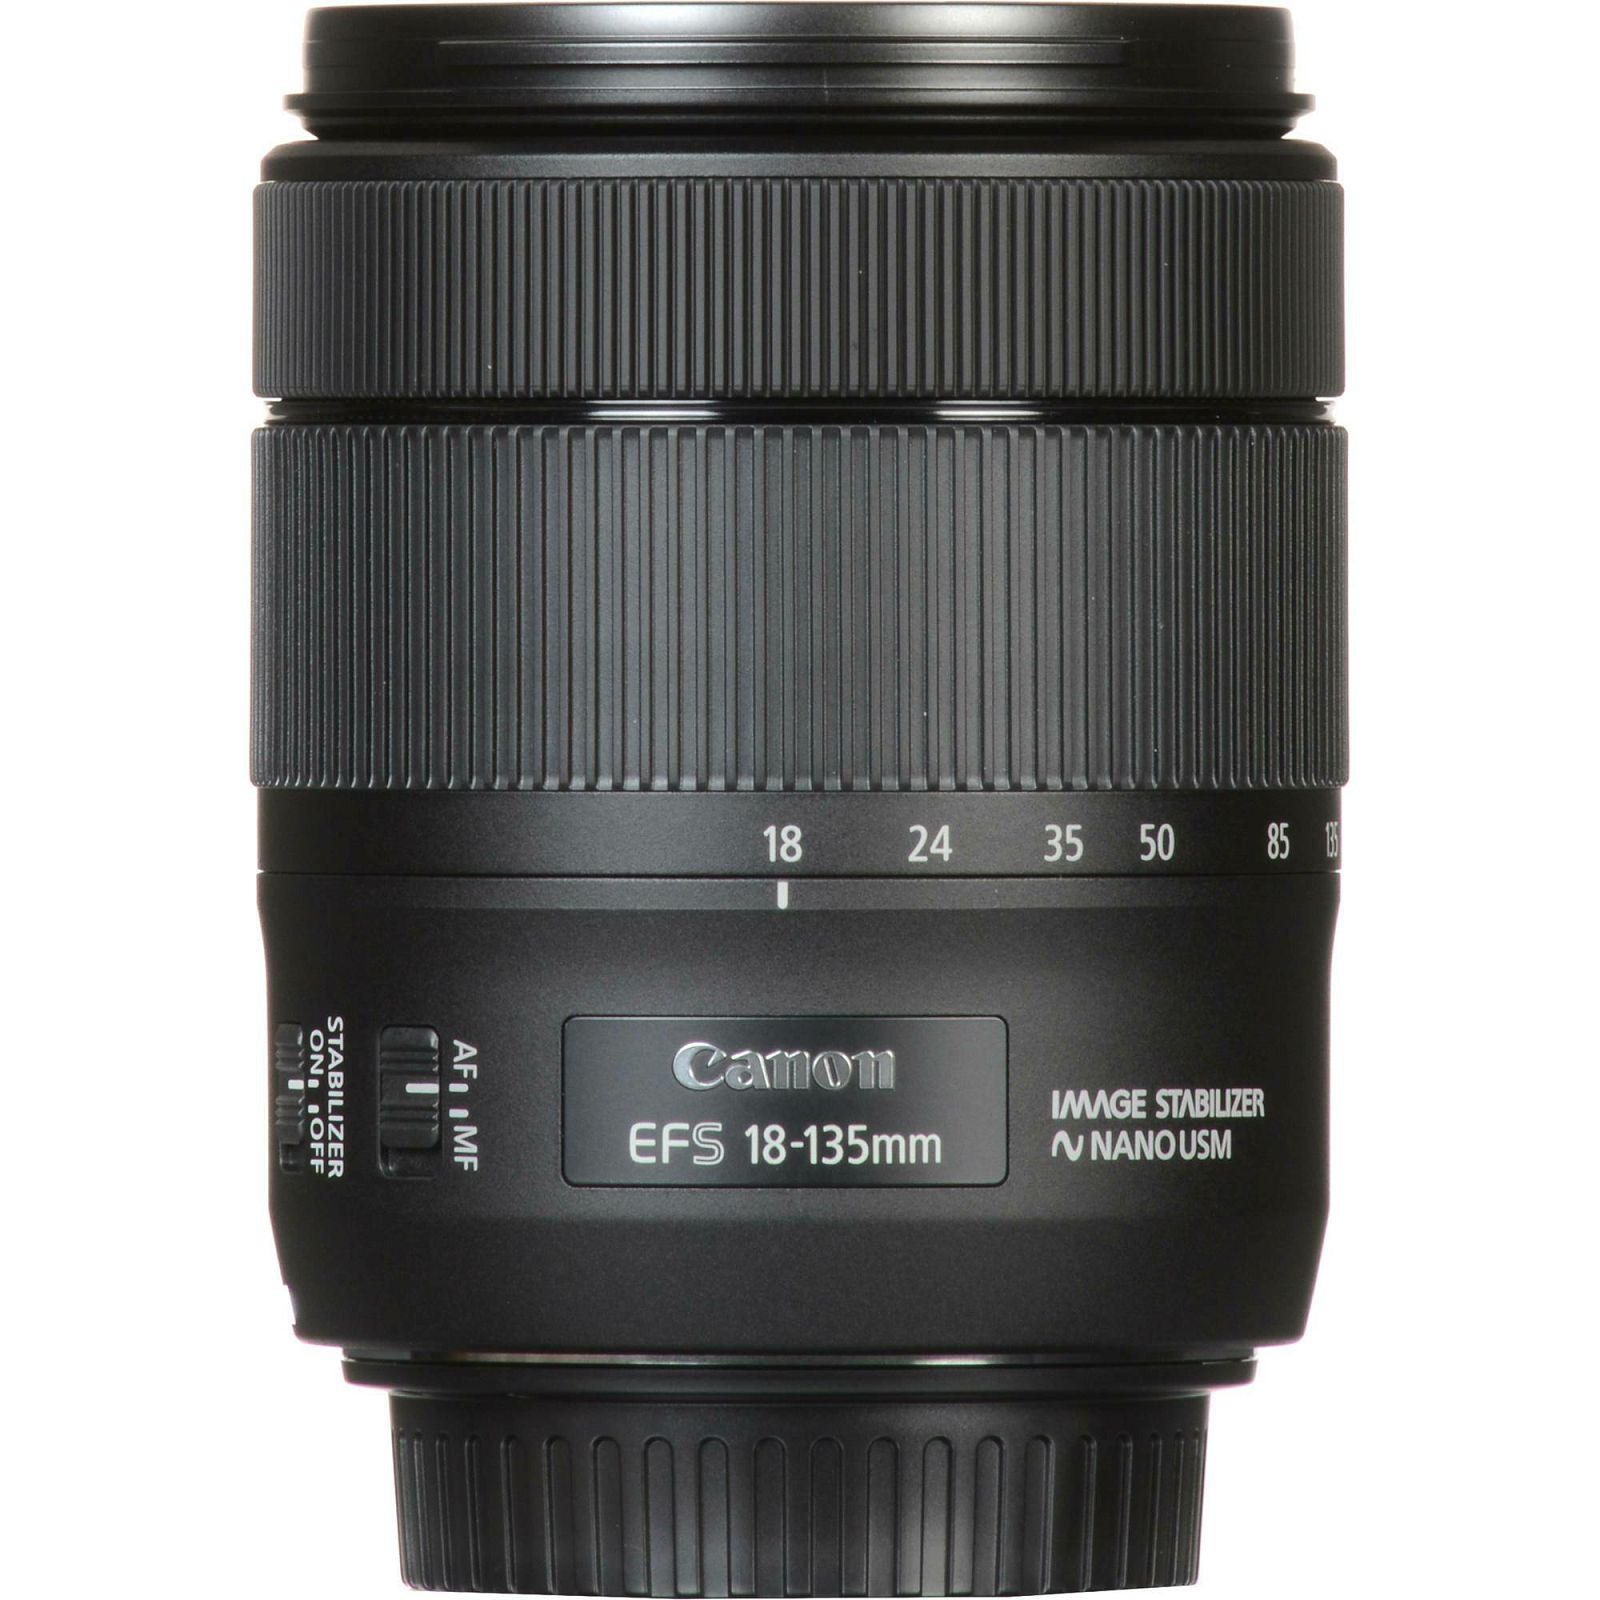 Canon EF-S 18-135mm f/3.5-5.6 IS USM NANO (bulk)